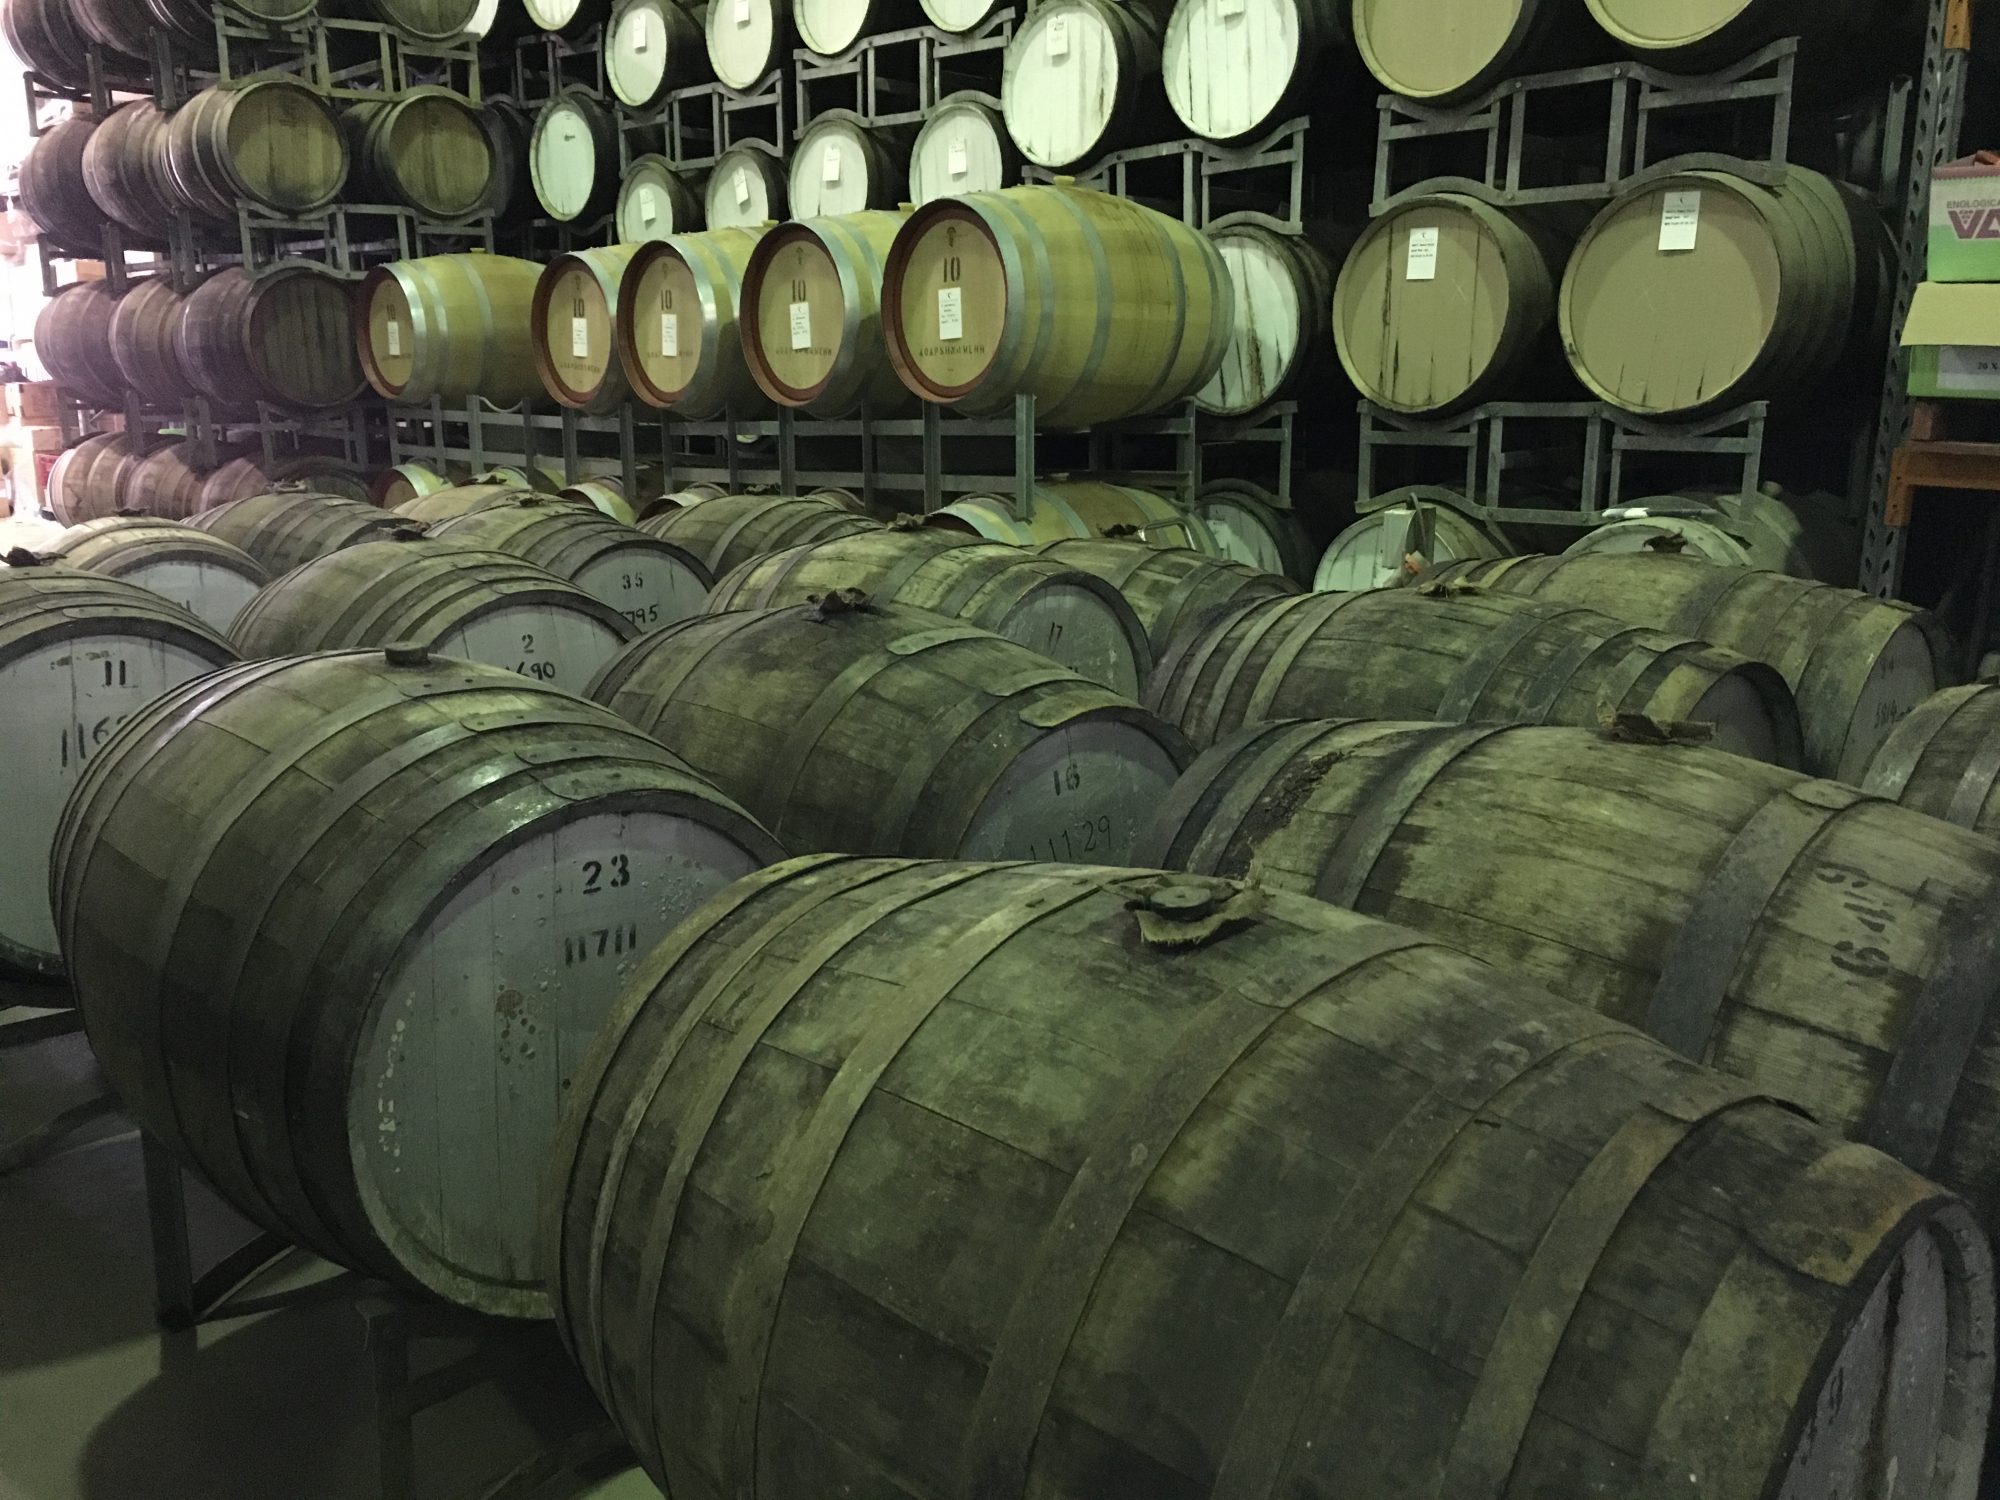 St Anne's Winery Wine barrels